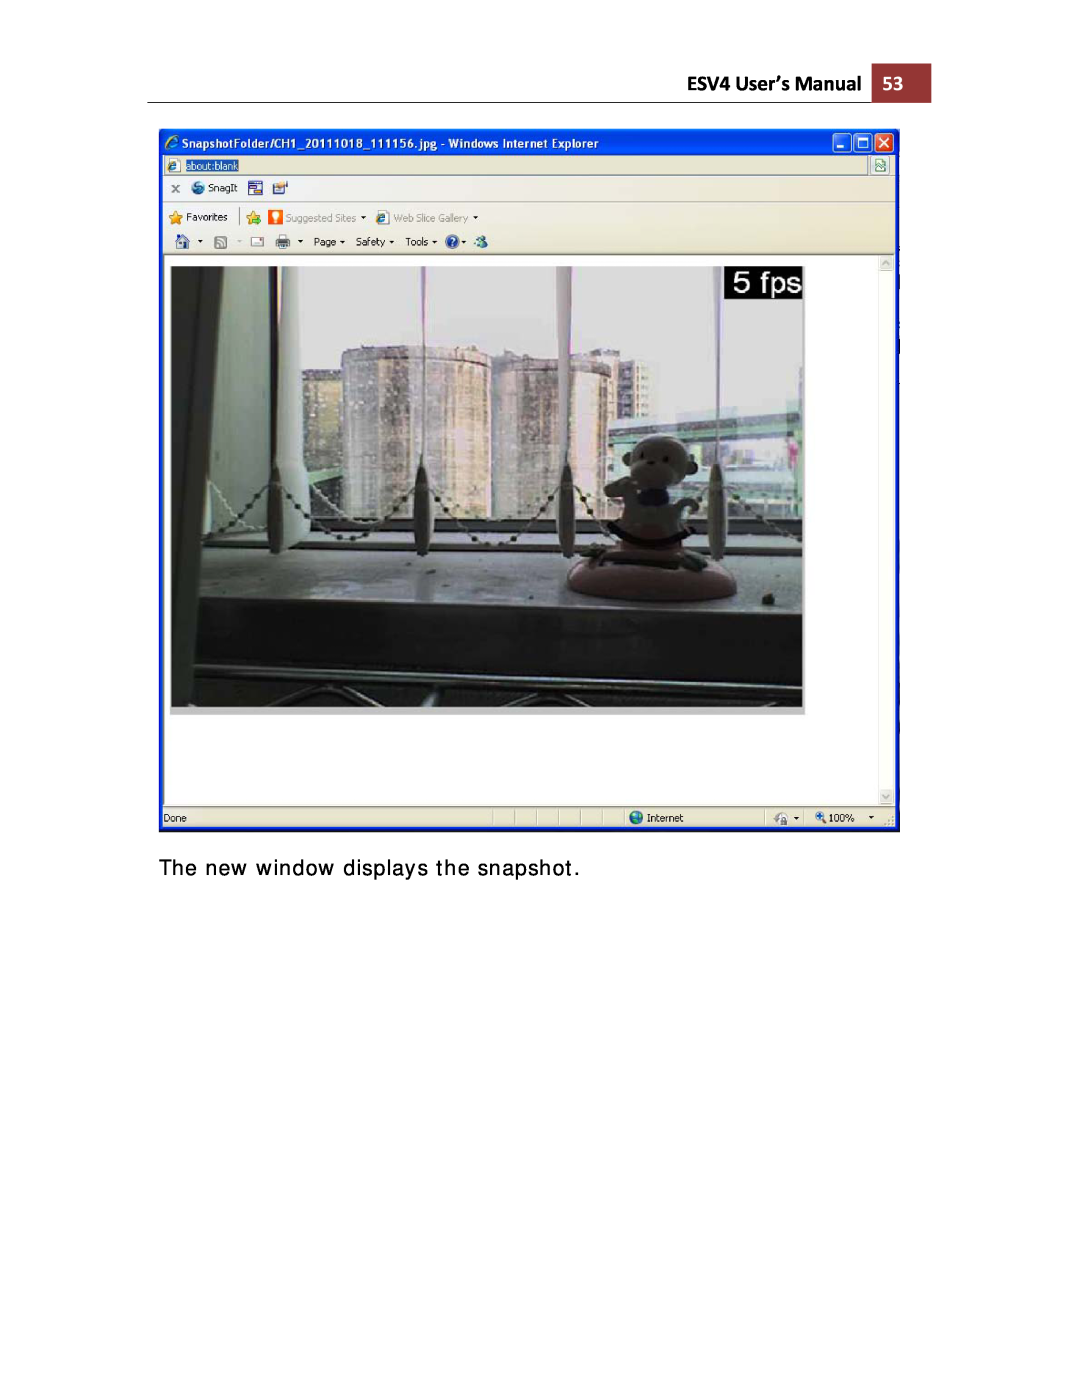 Toshiba ESV41T user manual ESV4 User’s Manual, The new window displays the snapshot 